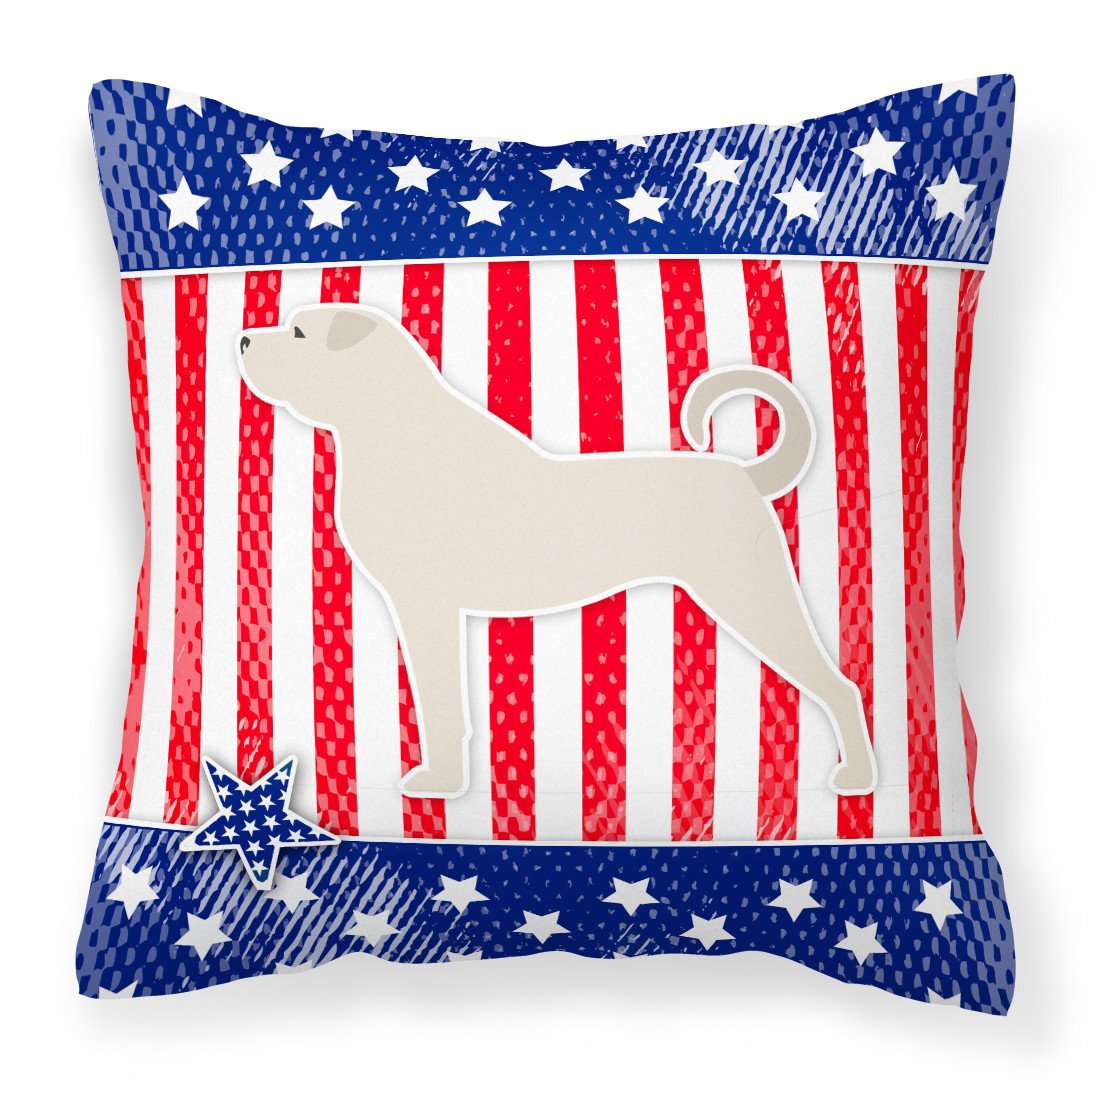 USA Patriotic Anatolian Shepherd Fabric Decorative Pillow BB3377PW1818 by Caroline's Treasures